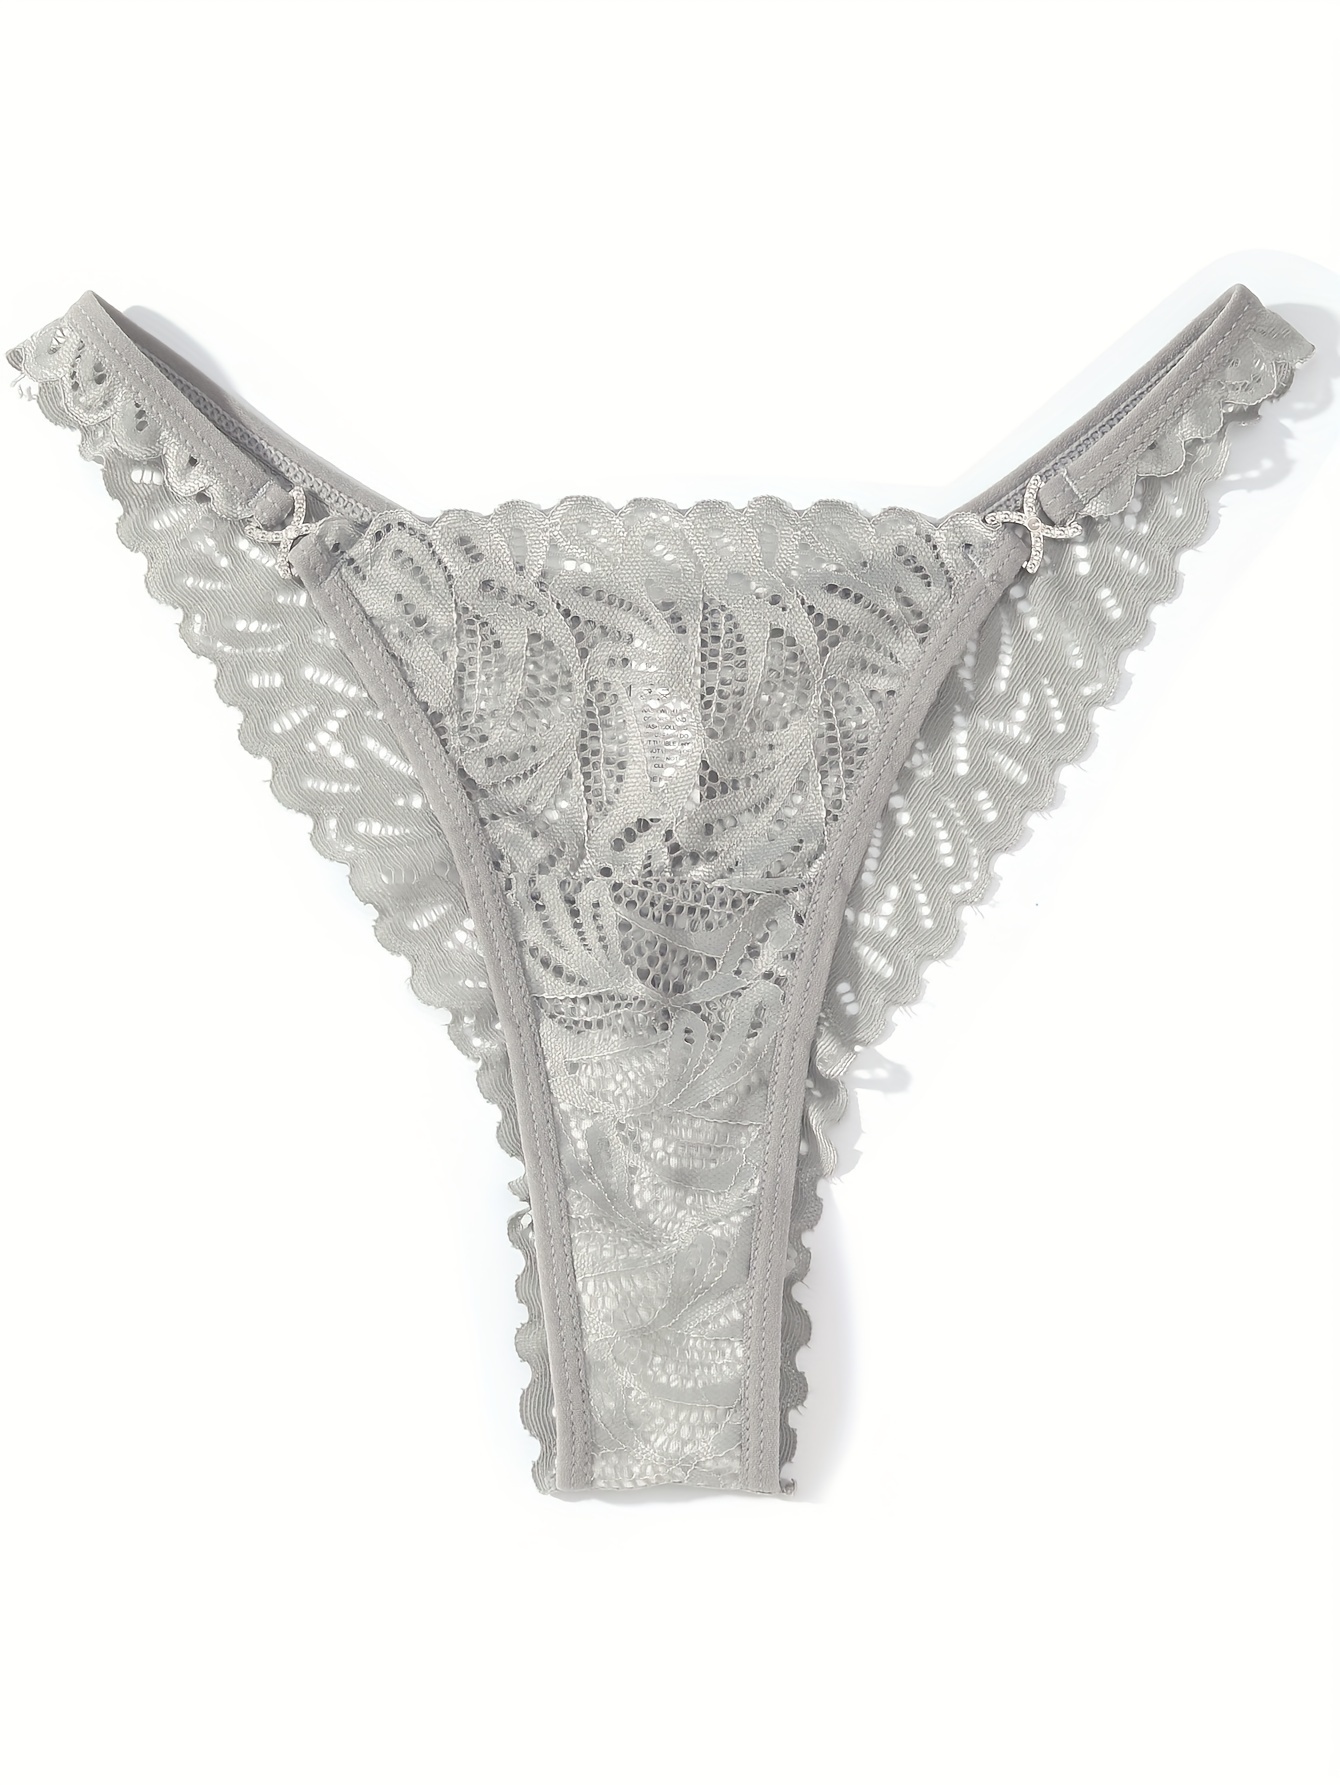 3pcs/lot Sexy Lace Thongs Panties Women Underwear T-Back Breathable Panty  Ladies Briefs